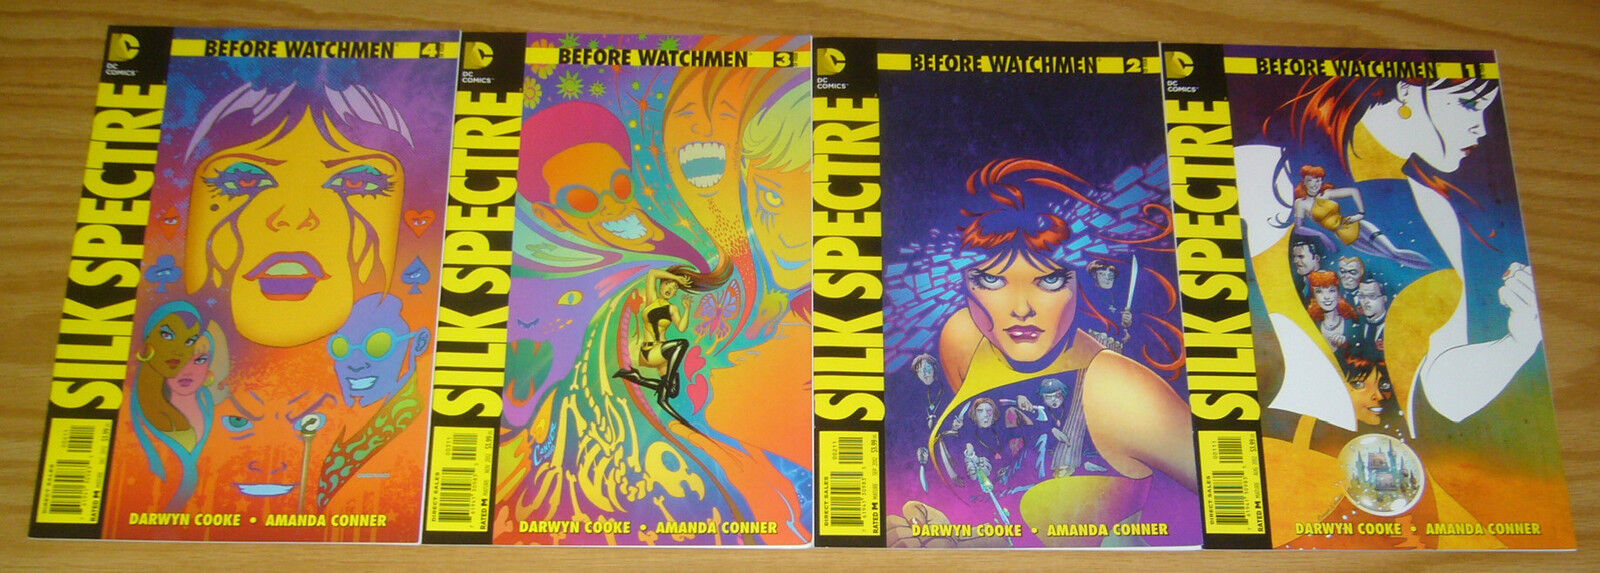 Before Watchmen: Silk Spectre #1-4 VF/NM complete series - darwyn cooke 2 3 set